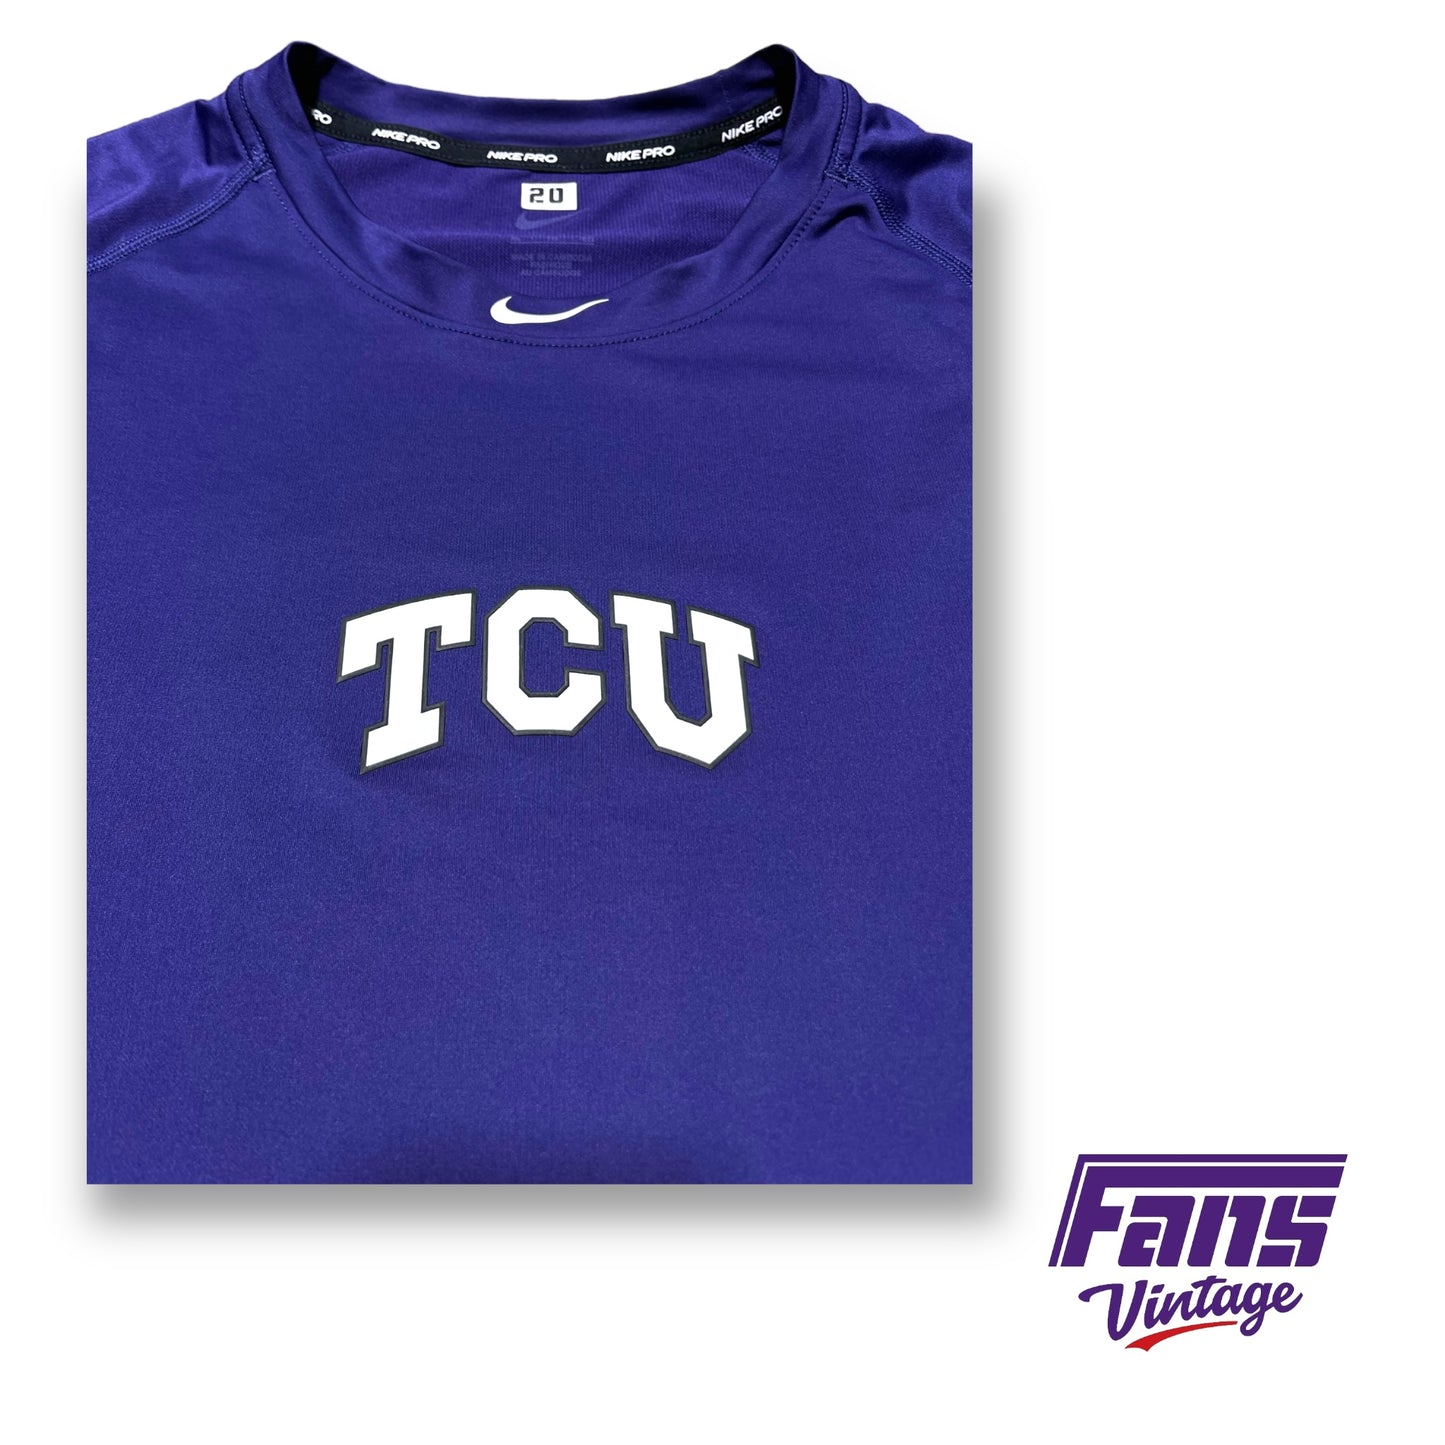 TCU Baseball Nike Pro Team Issued Center Swoosh Training Shirt